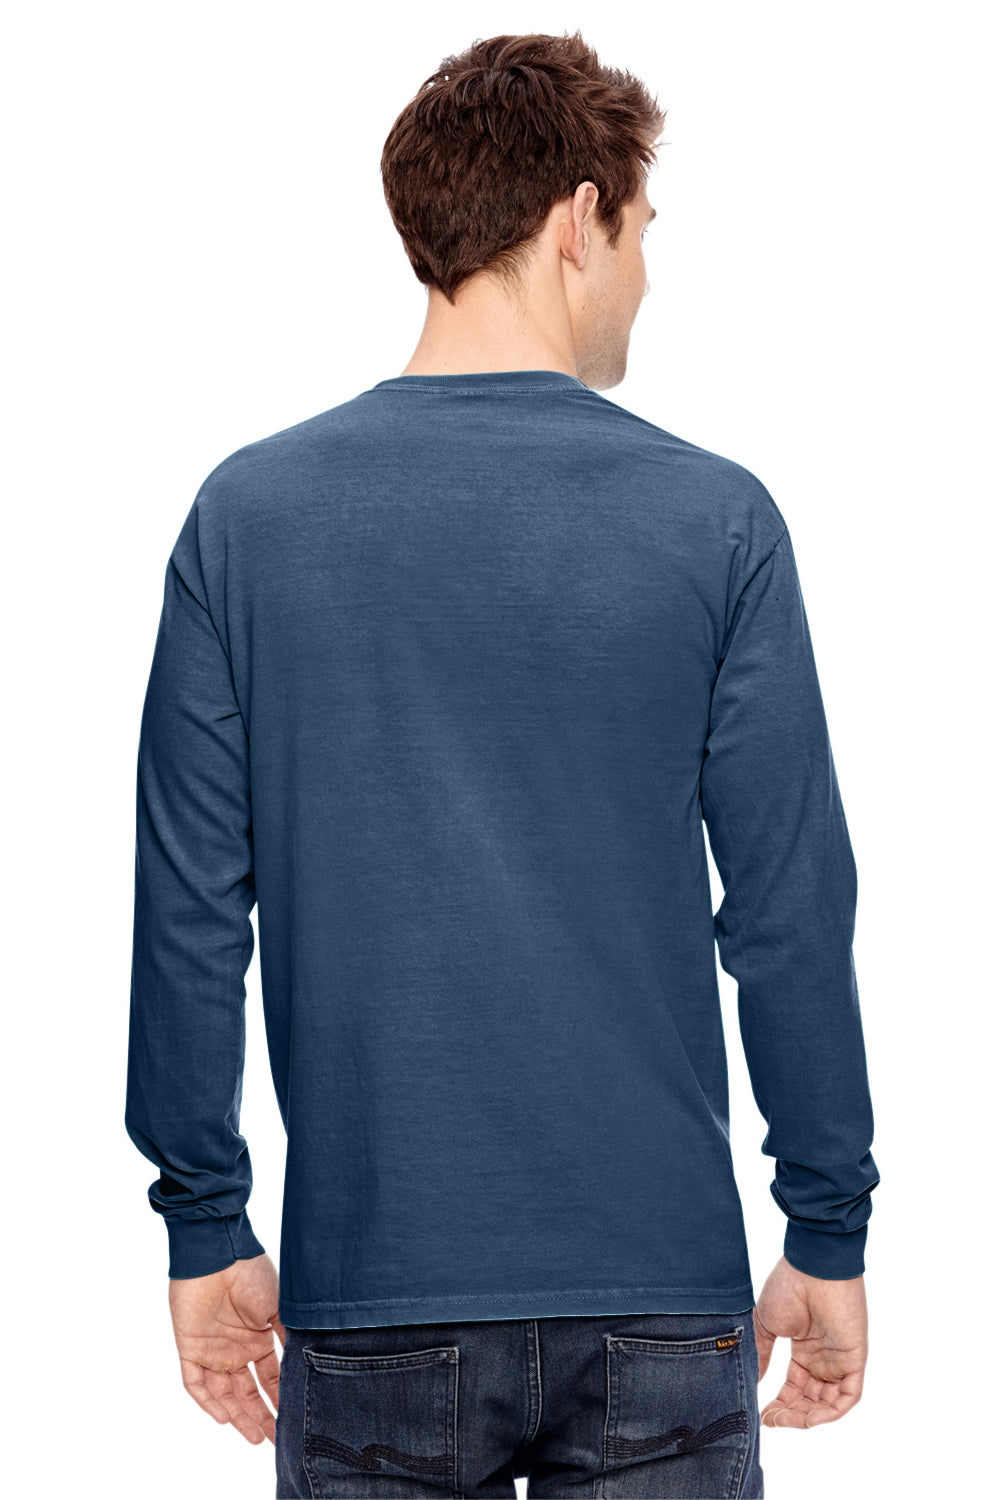 Comfort Colors C4410 Mens Long Sleeve Crewneck T-Shirt w/ Pocket Navy Blue Back